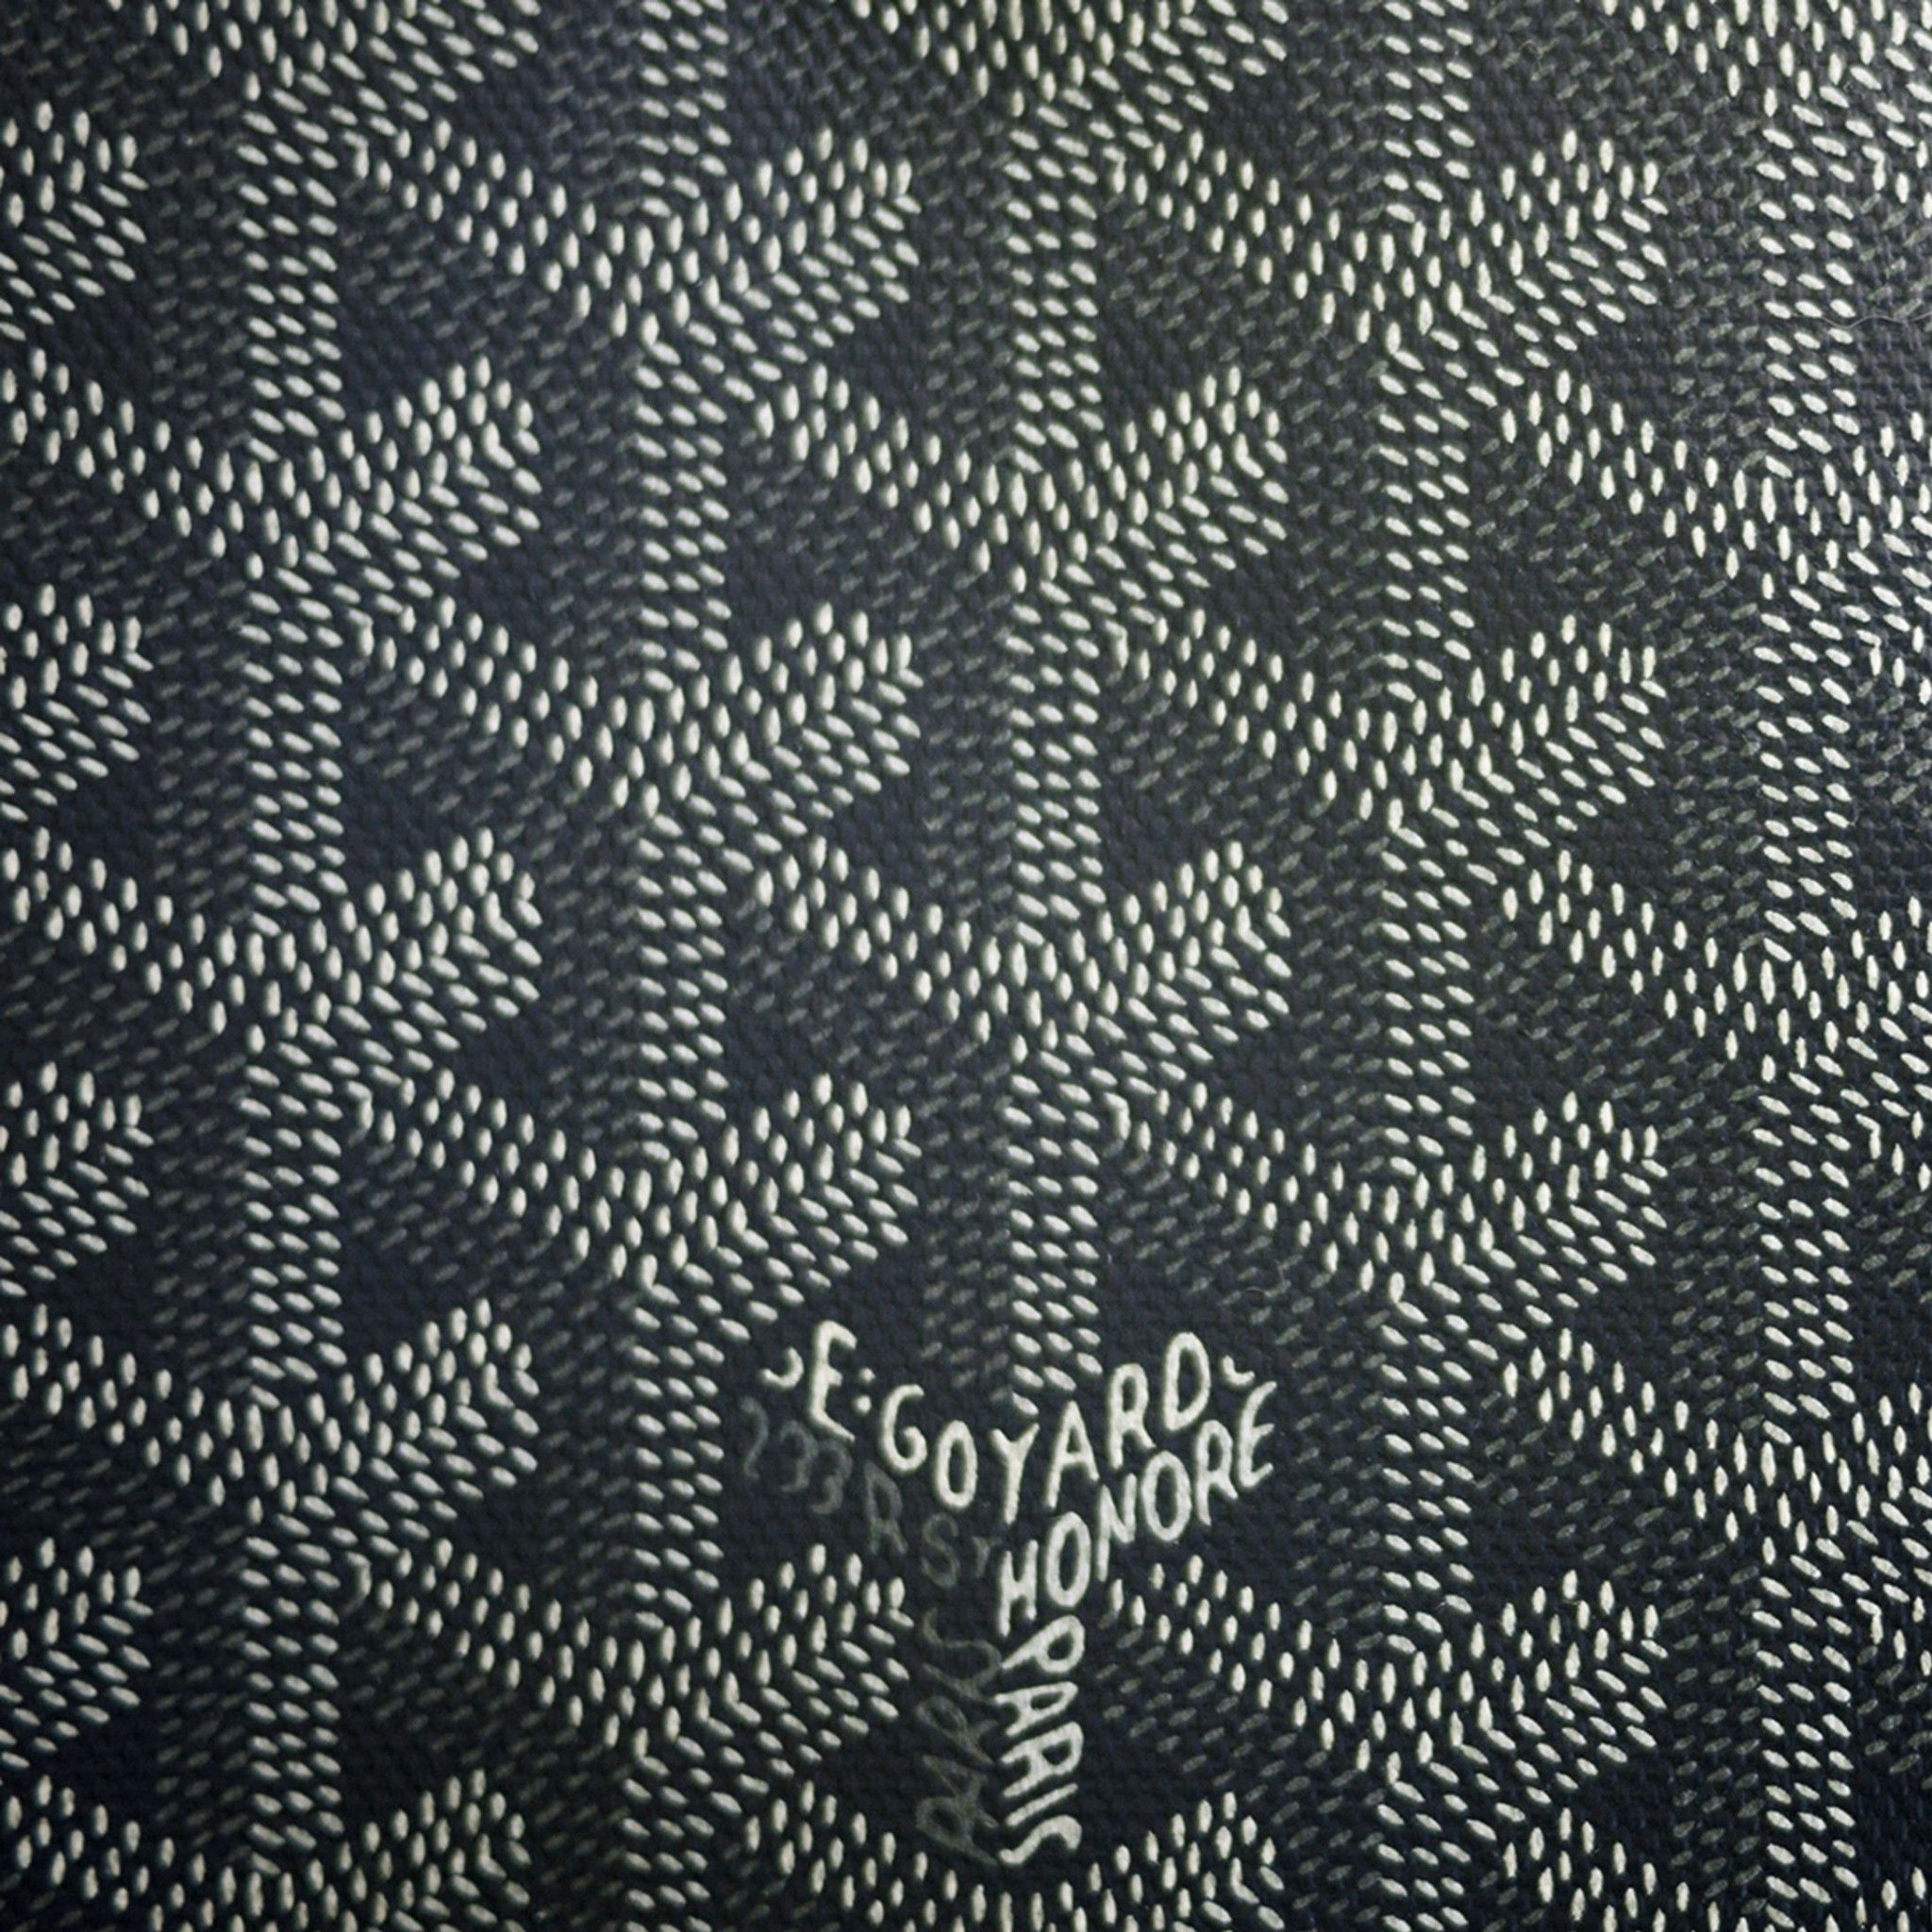 goyard iphone wallpaper,pattern,woven fabric,textile,design,weaving  (#365173) - WallpaperUse